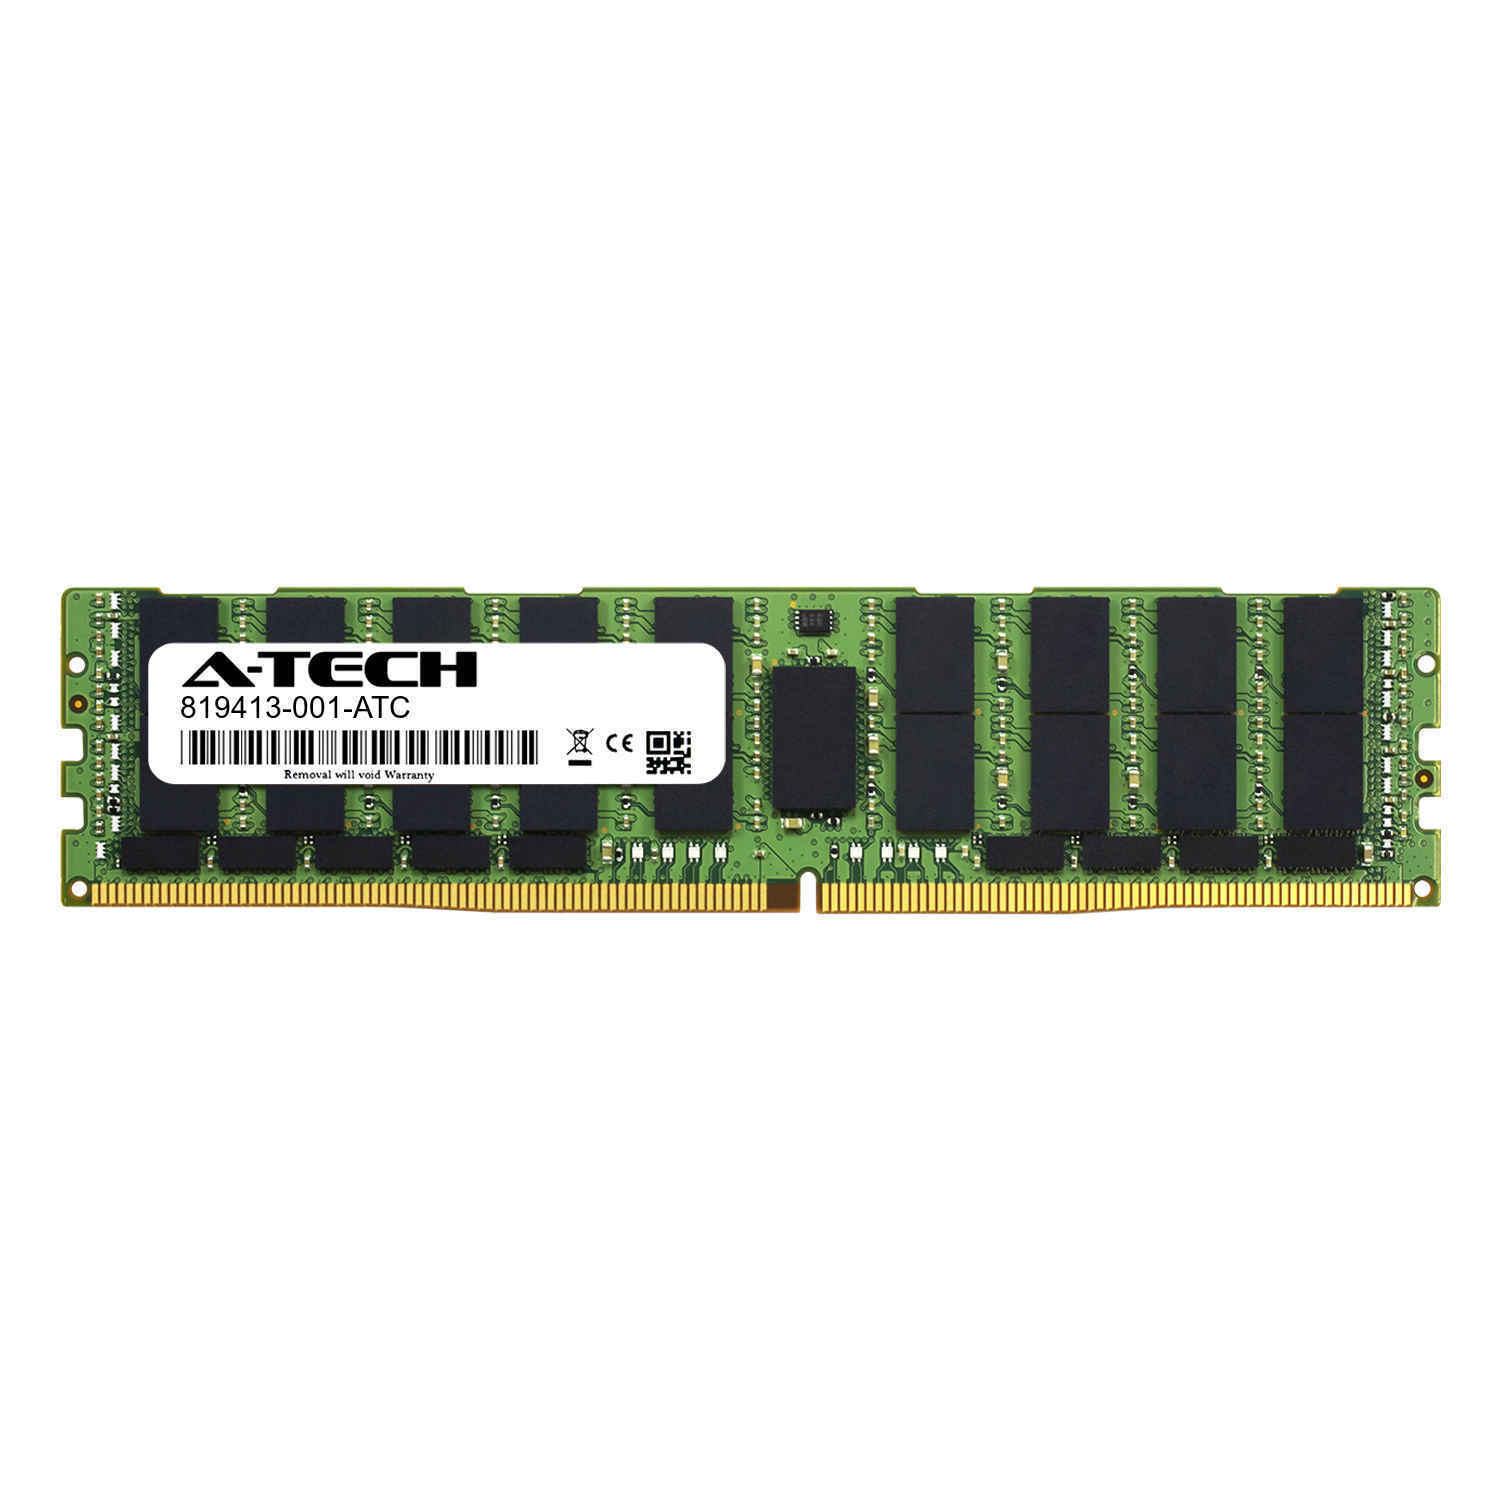 64GB DDR4 2400MHz PC4-19200L LRDIMM (HP 819413-001 Equivalent) Server Memory RAM